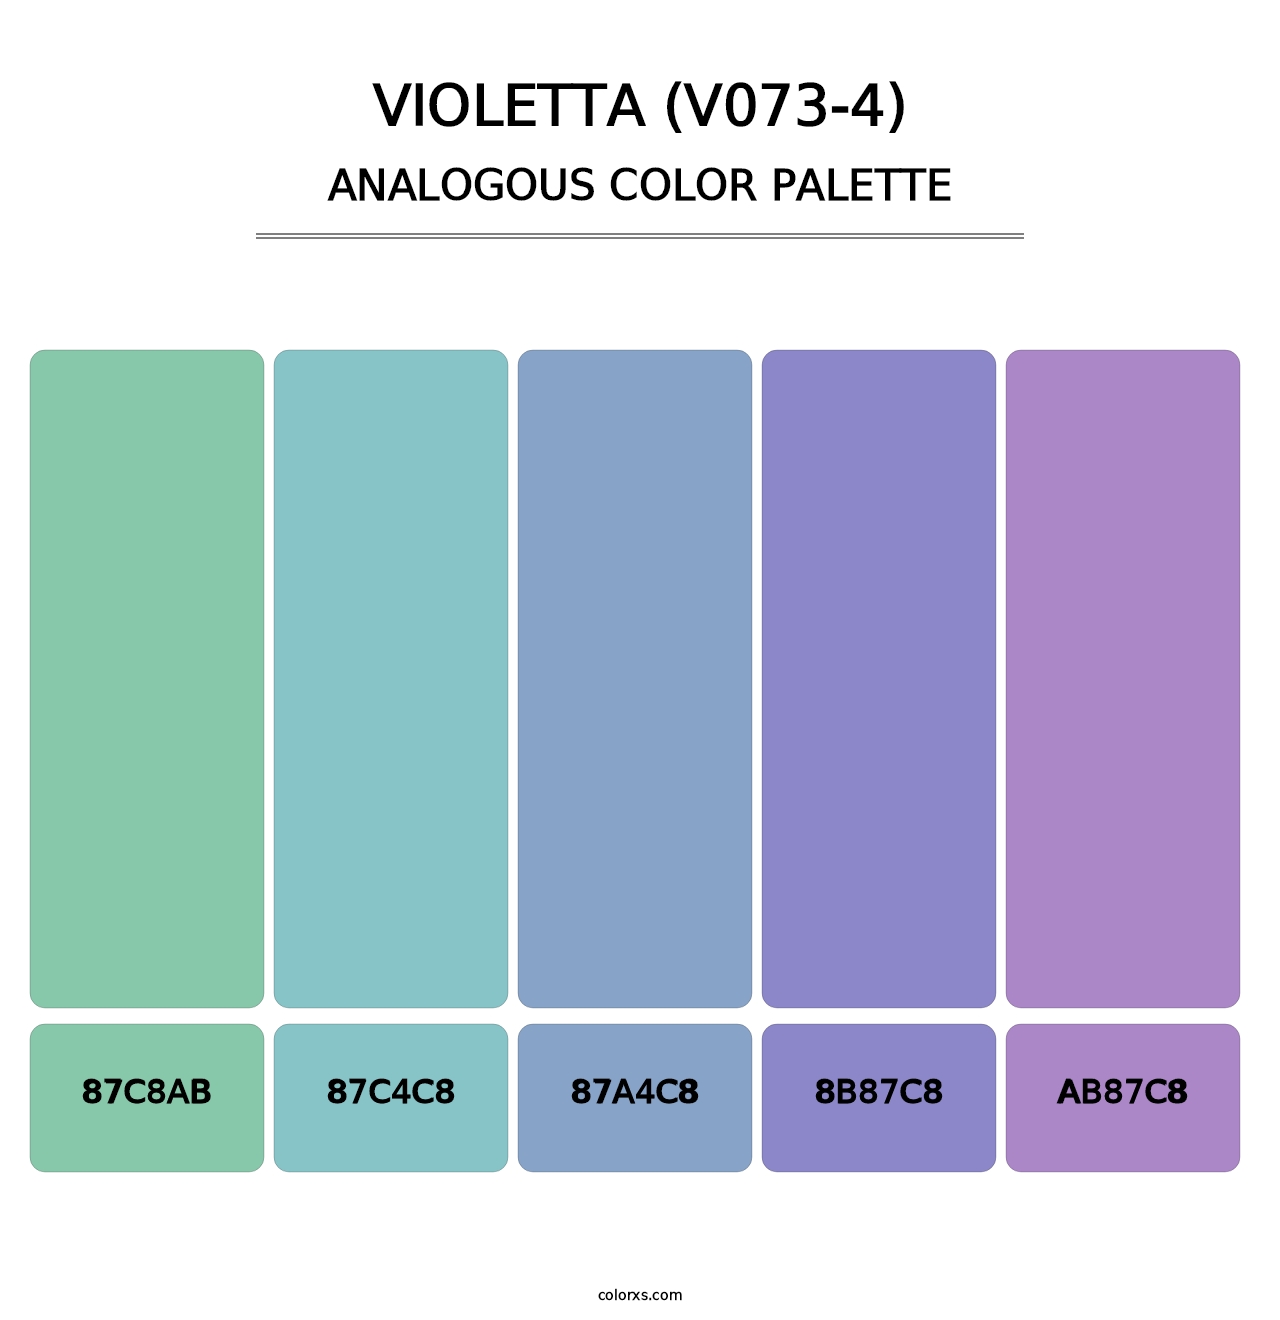 Violetta (V073-4) - Analogous Color Palette